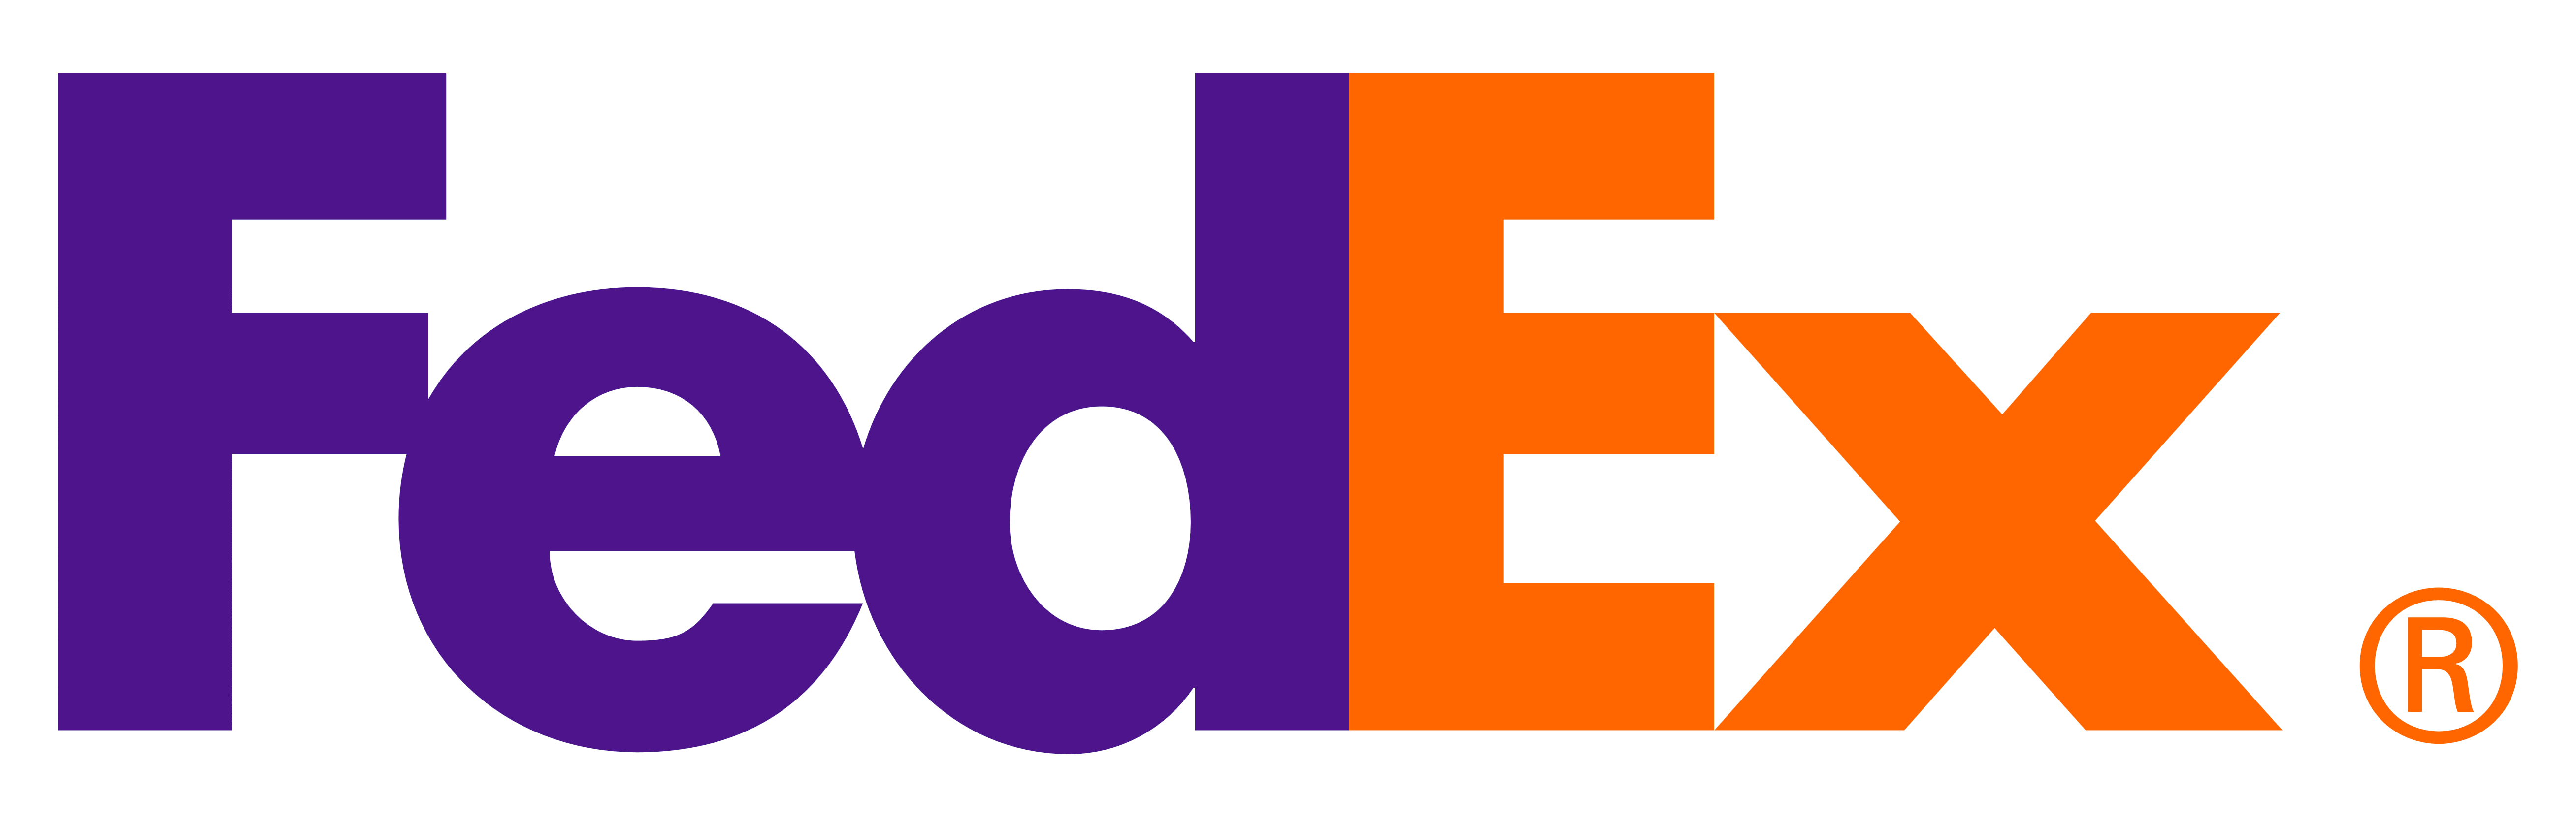 FedEx Office New Logo - FedEx Logo PNG Transparent Weather AssociationNational